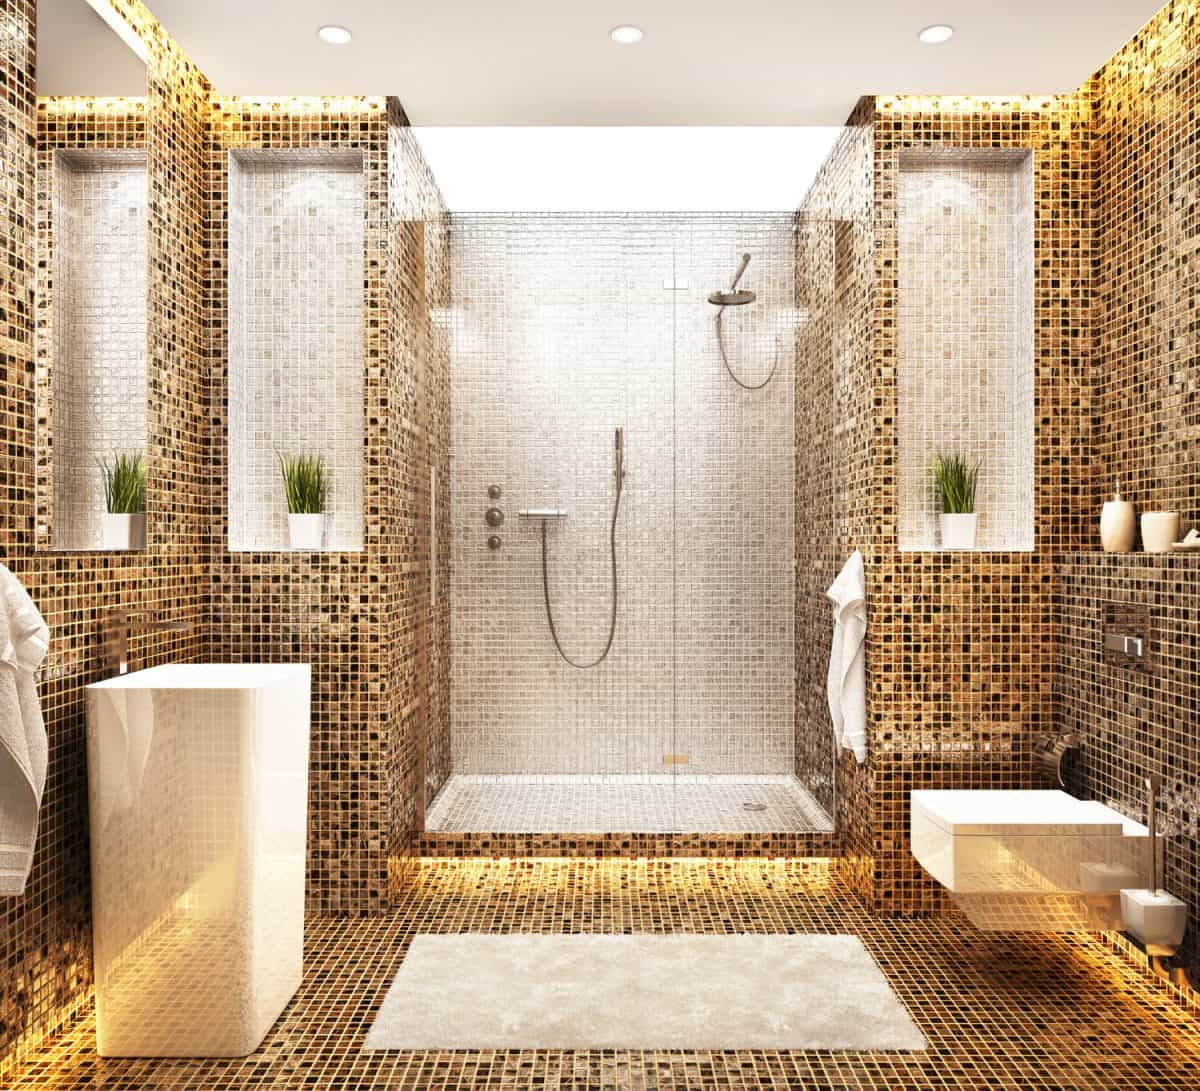 Modern beautiful bathroom design. White and brown mosaic